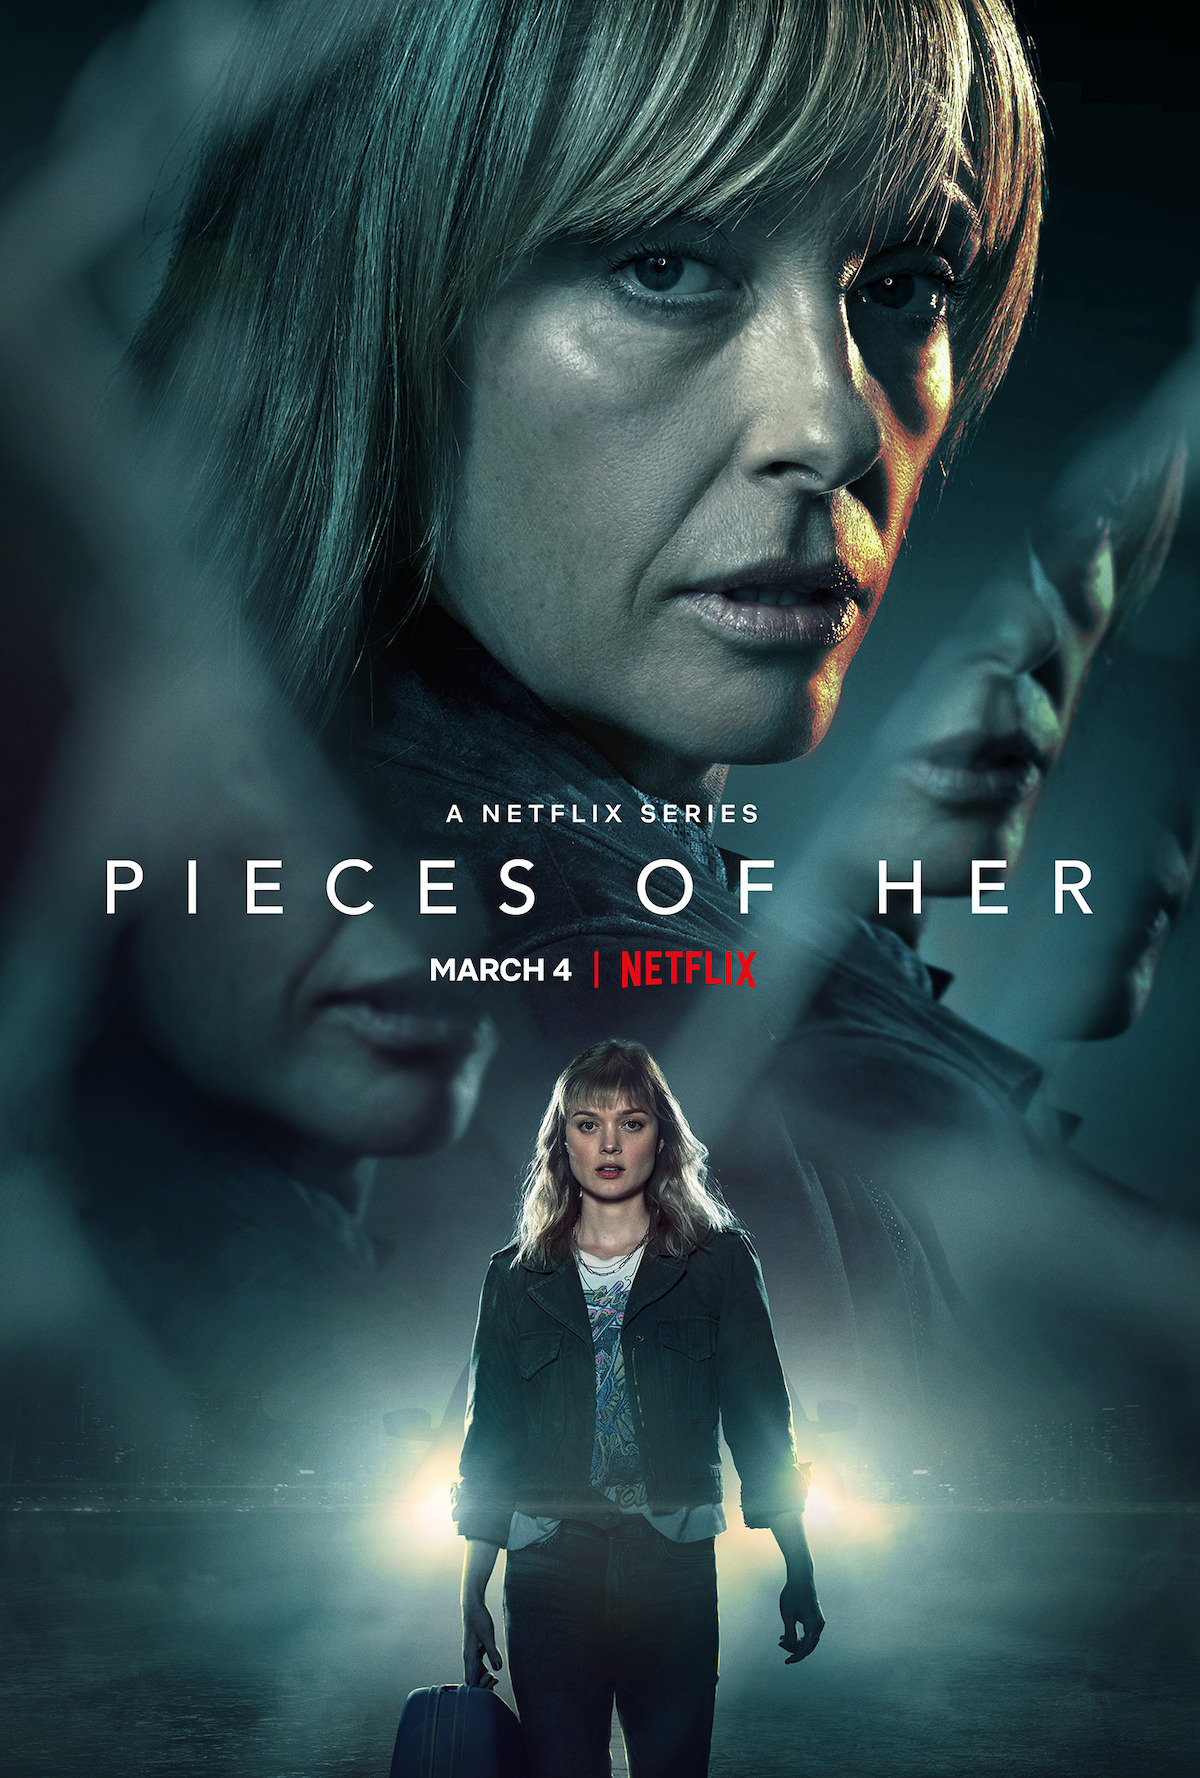 Pieces of Her release date, Cast, plot, trailer for Netflix thriller